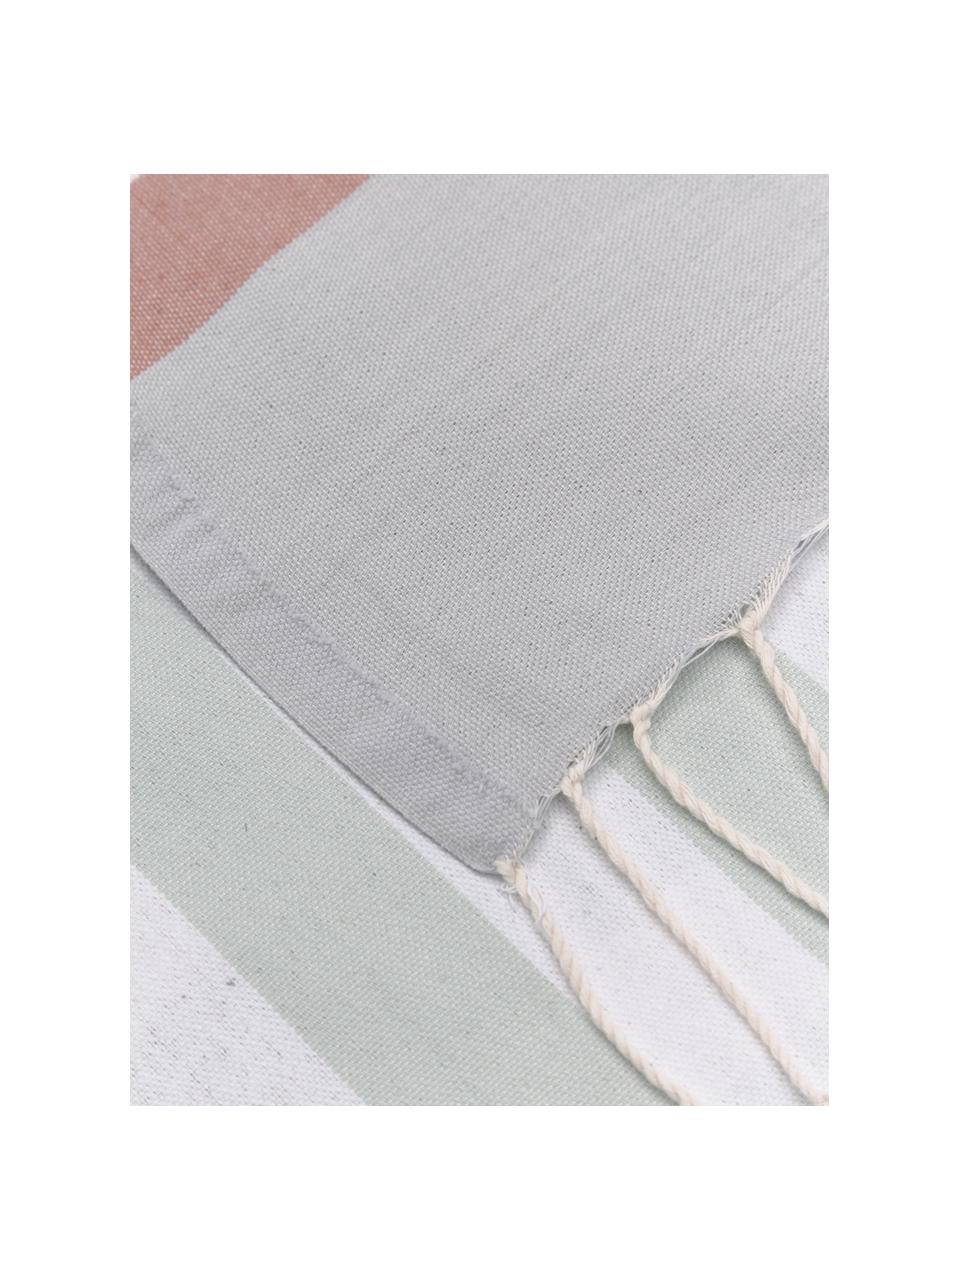 Fouta rayé à franges Arcachon, 100 % coton, Blanc, rose blush, gris clair, vert clair, larg. 100 x long. 200 cm